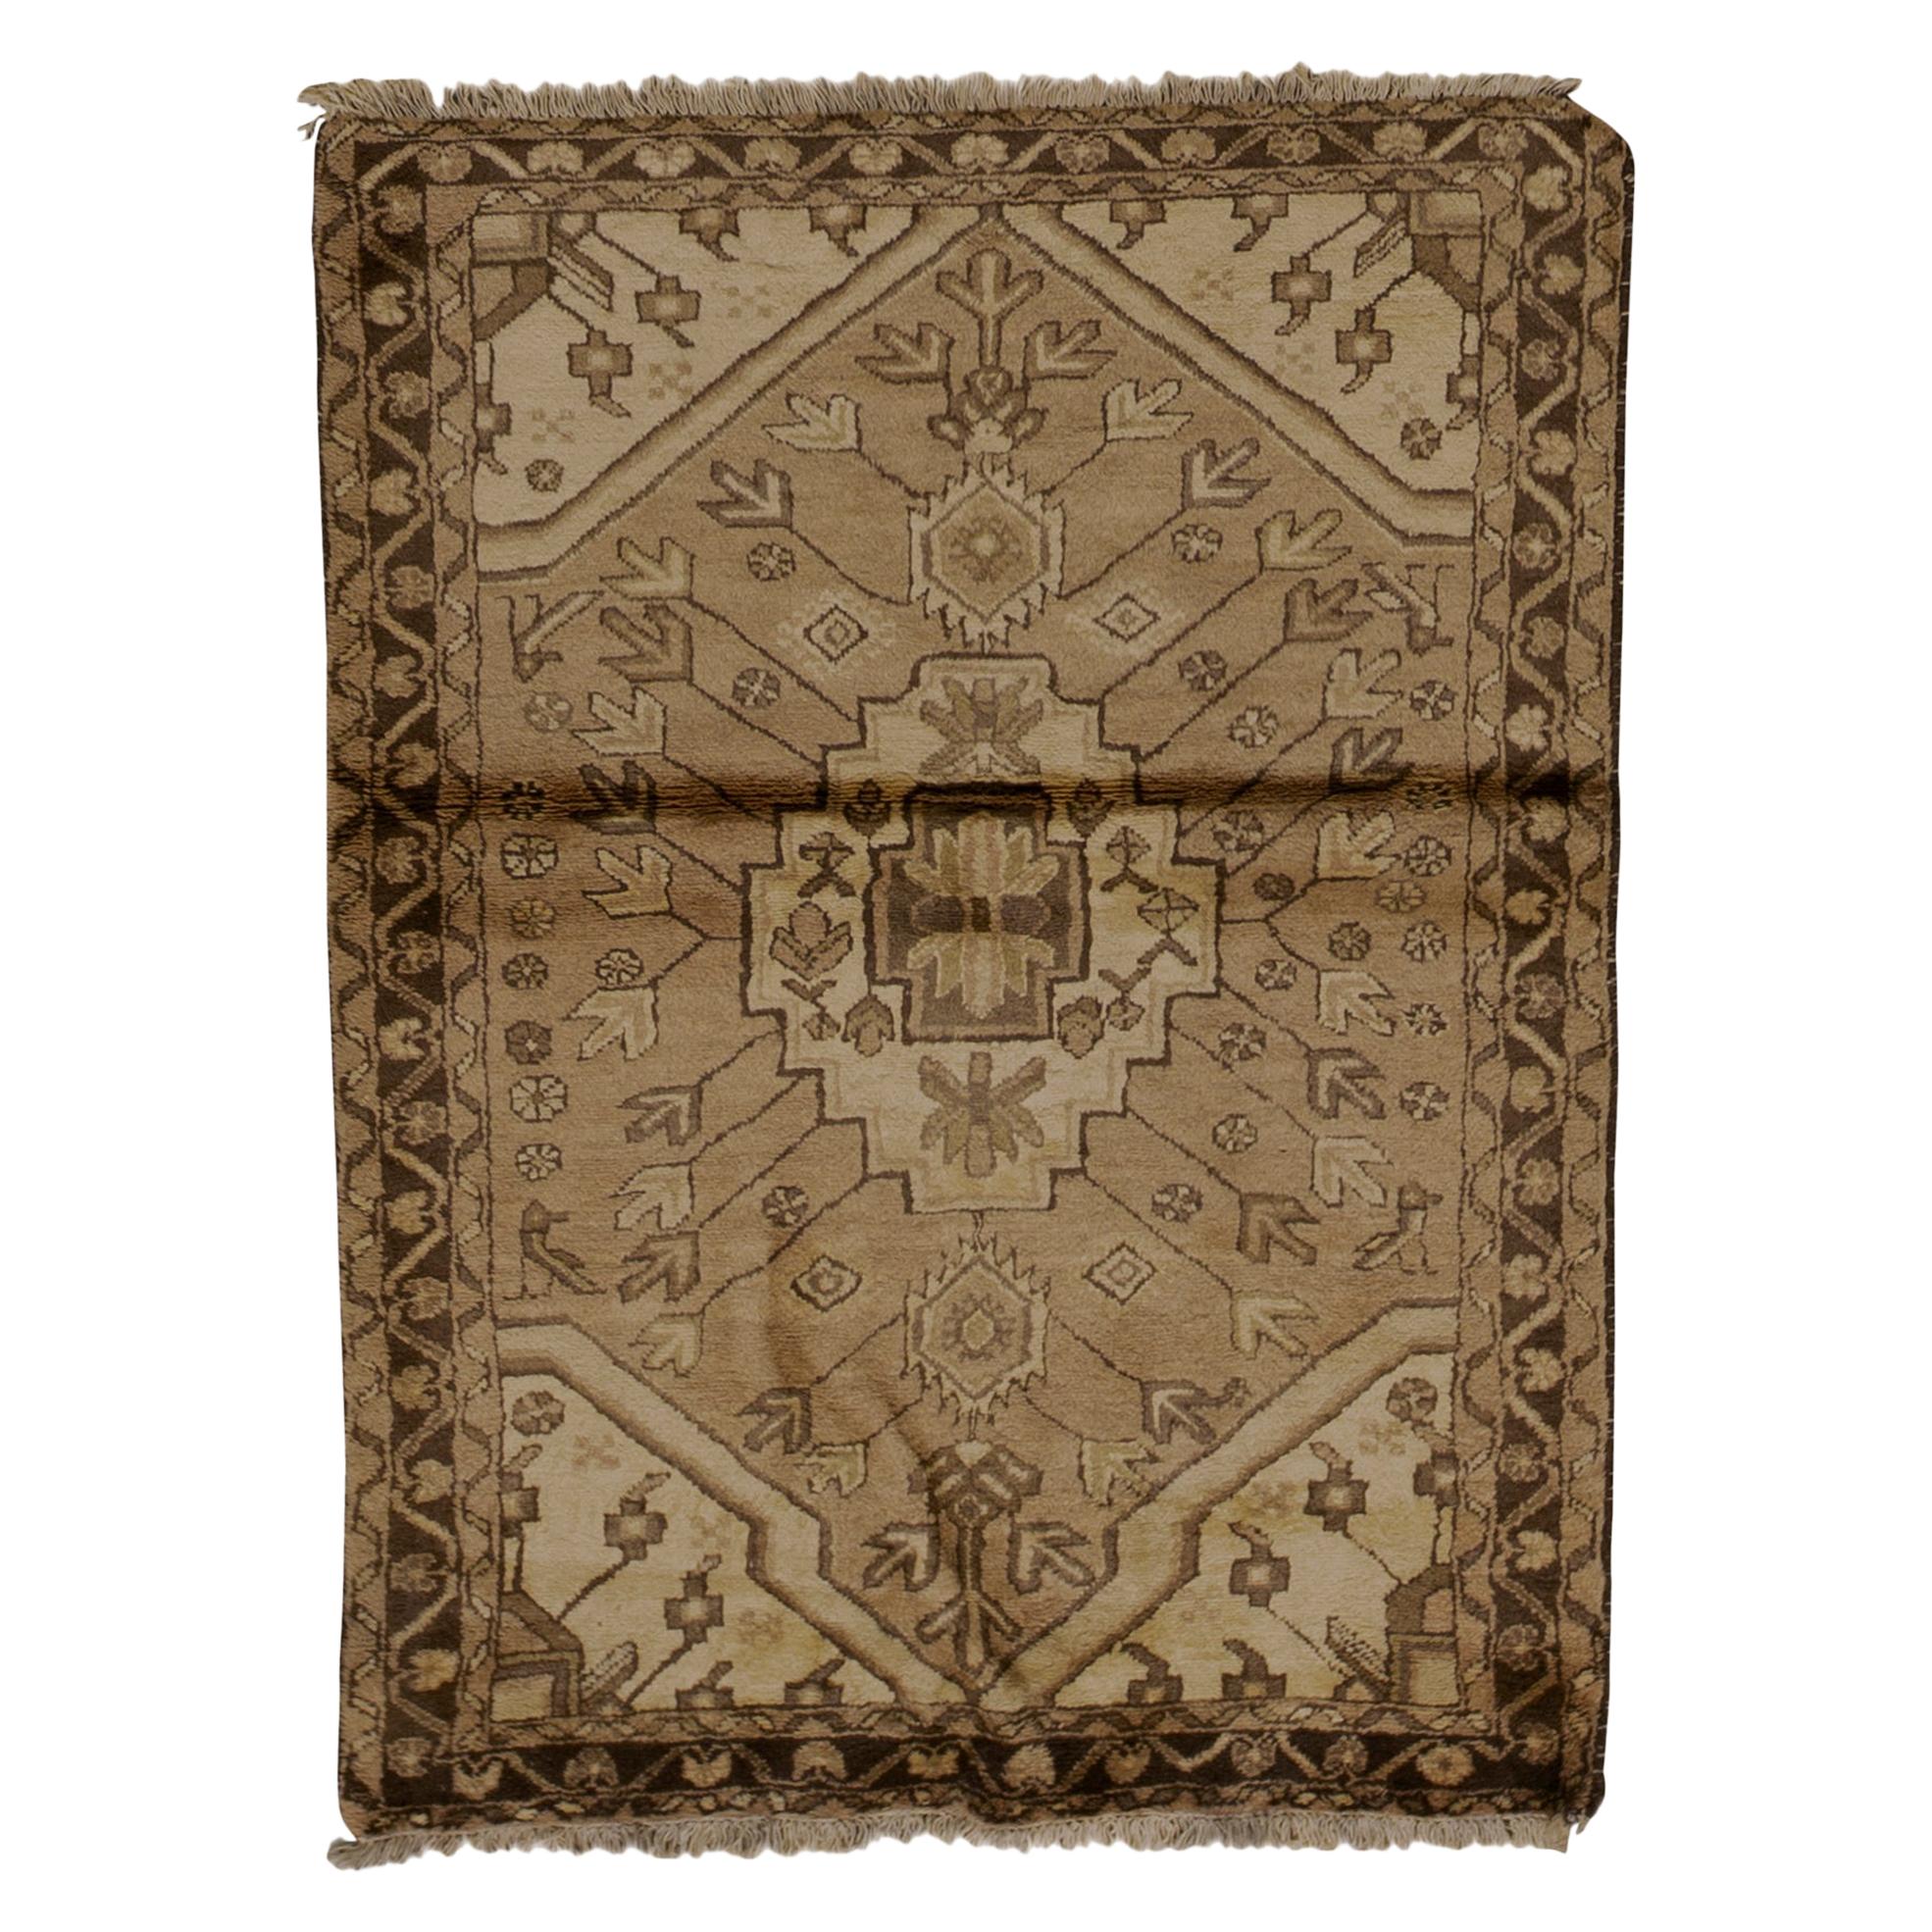  Antique Persian Fine Traditional Handwoven Luxury Wool Beige / Brown Rug